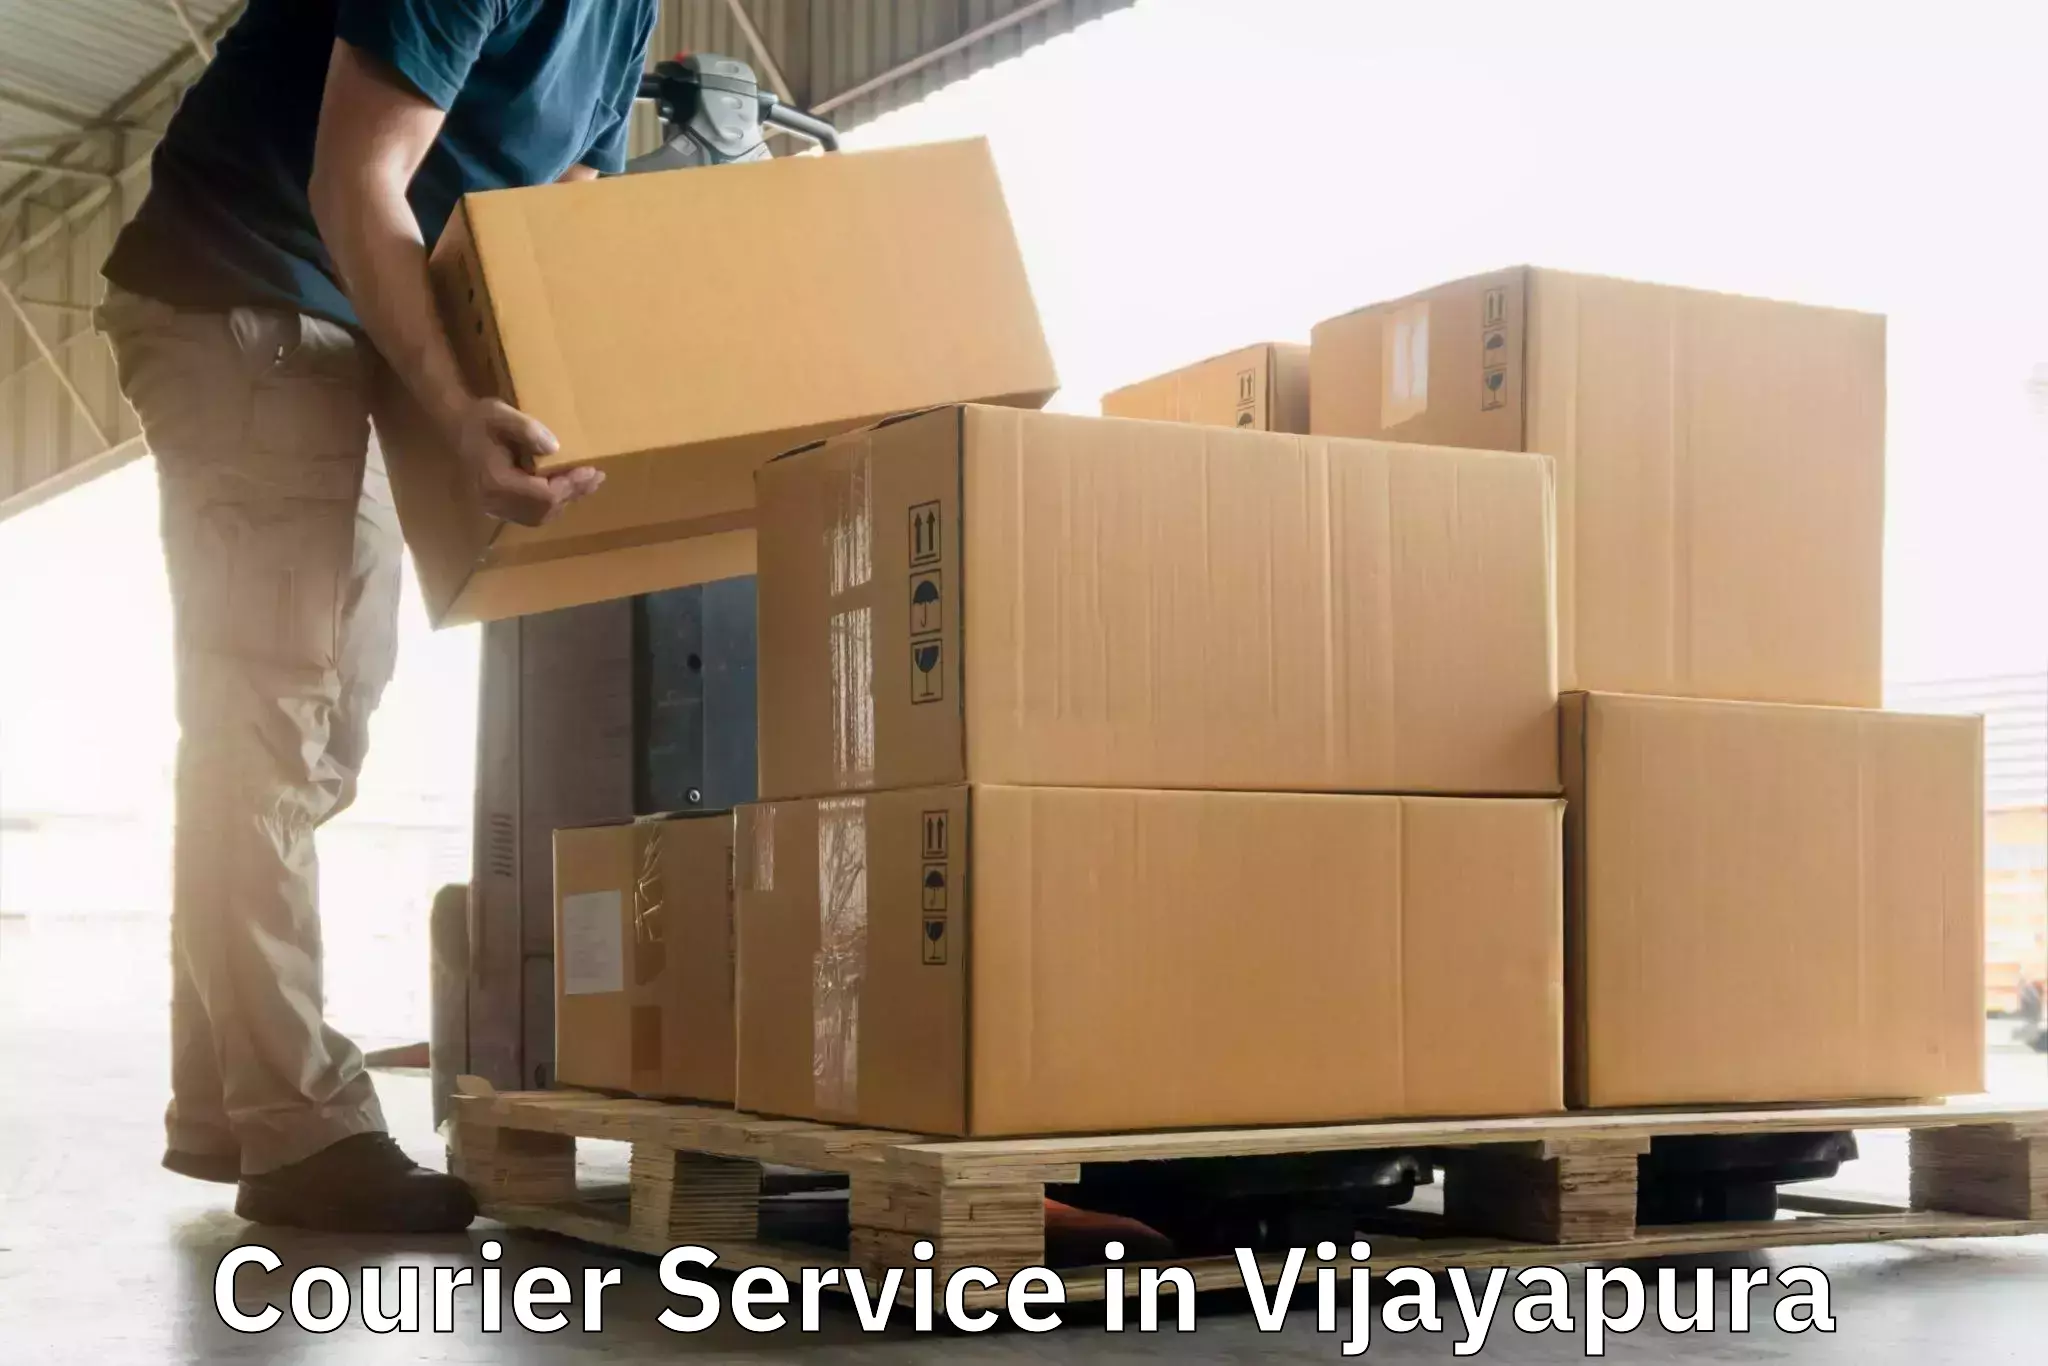 Postal and courier services in Vijayapura